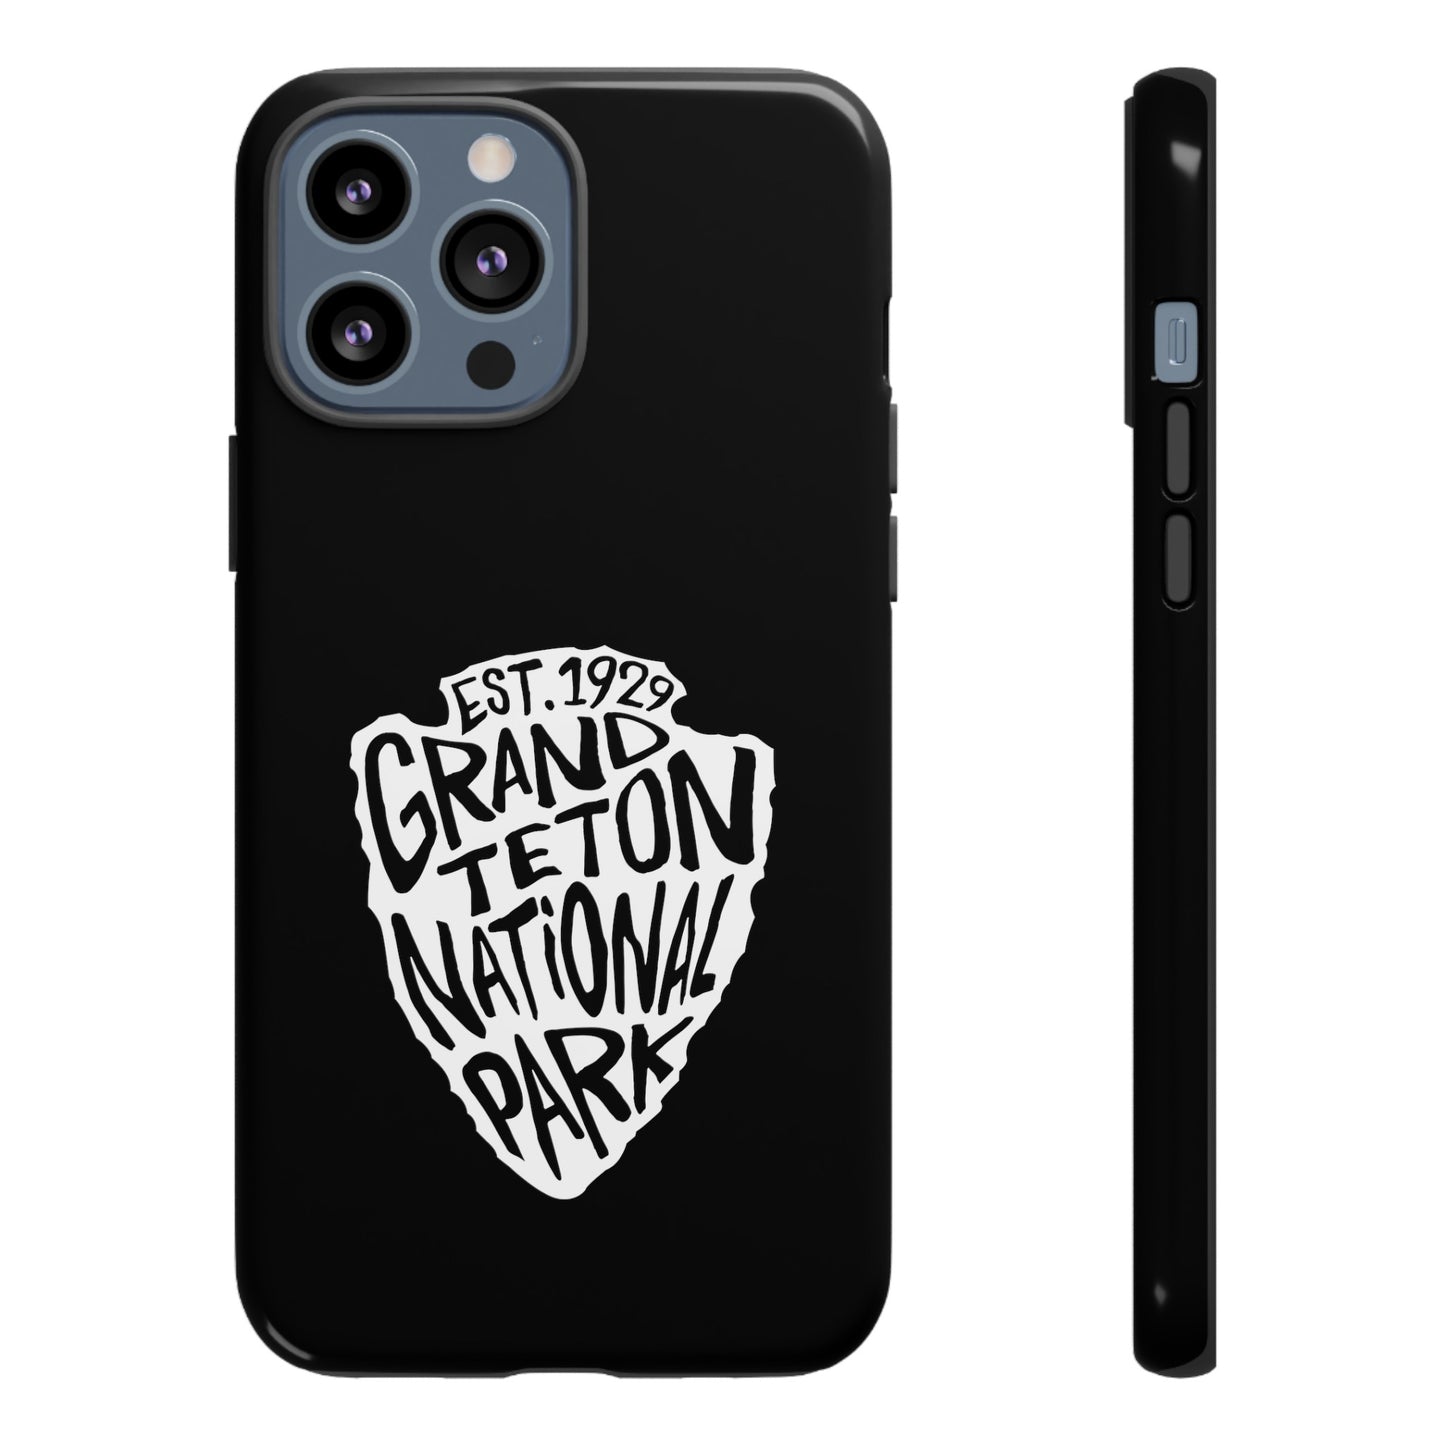 Grand Teton National Park Phone Case - Arrowhead Design